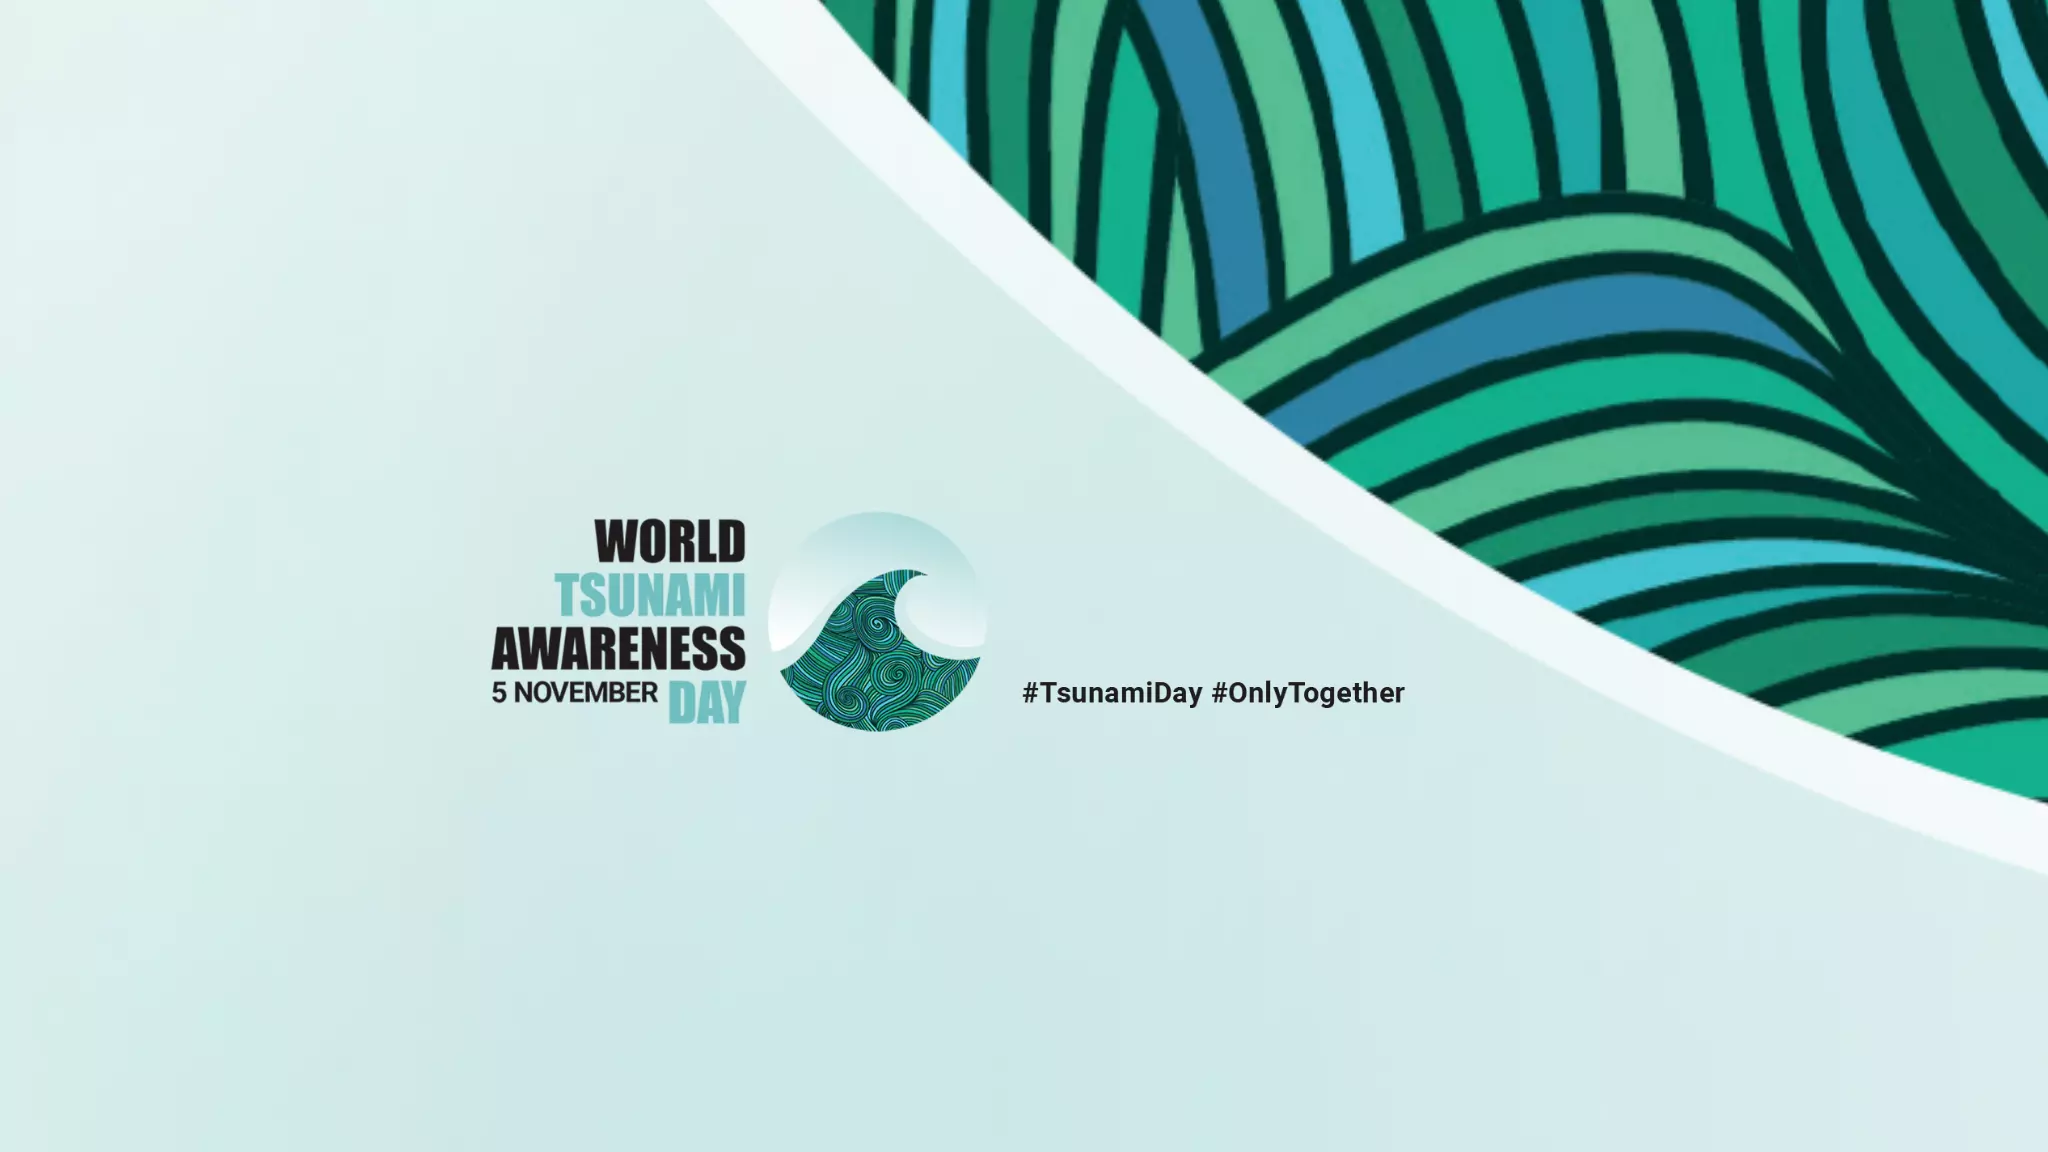 Video for World Tsunami Awareness Day (November 5)